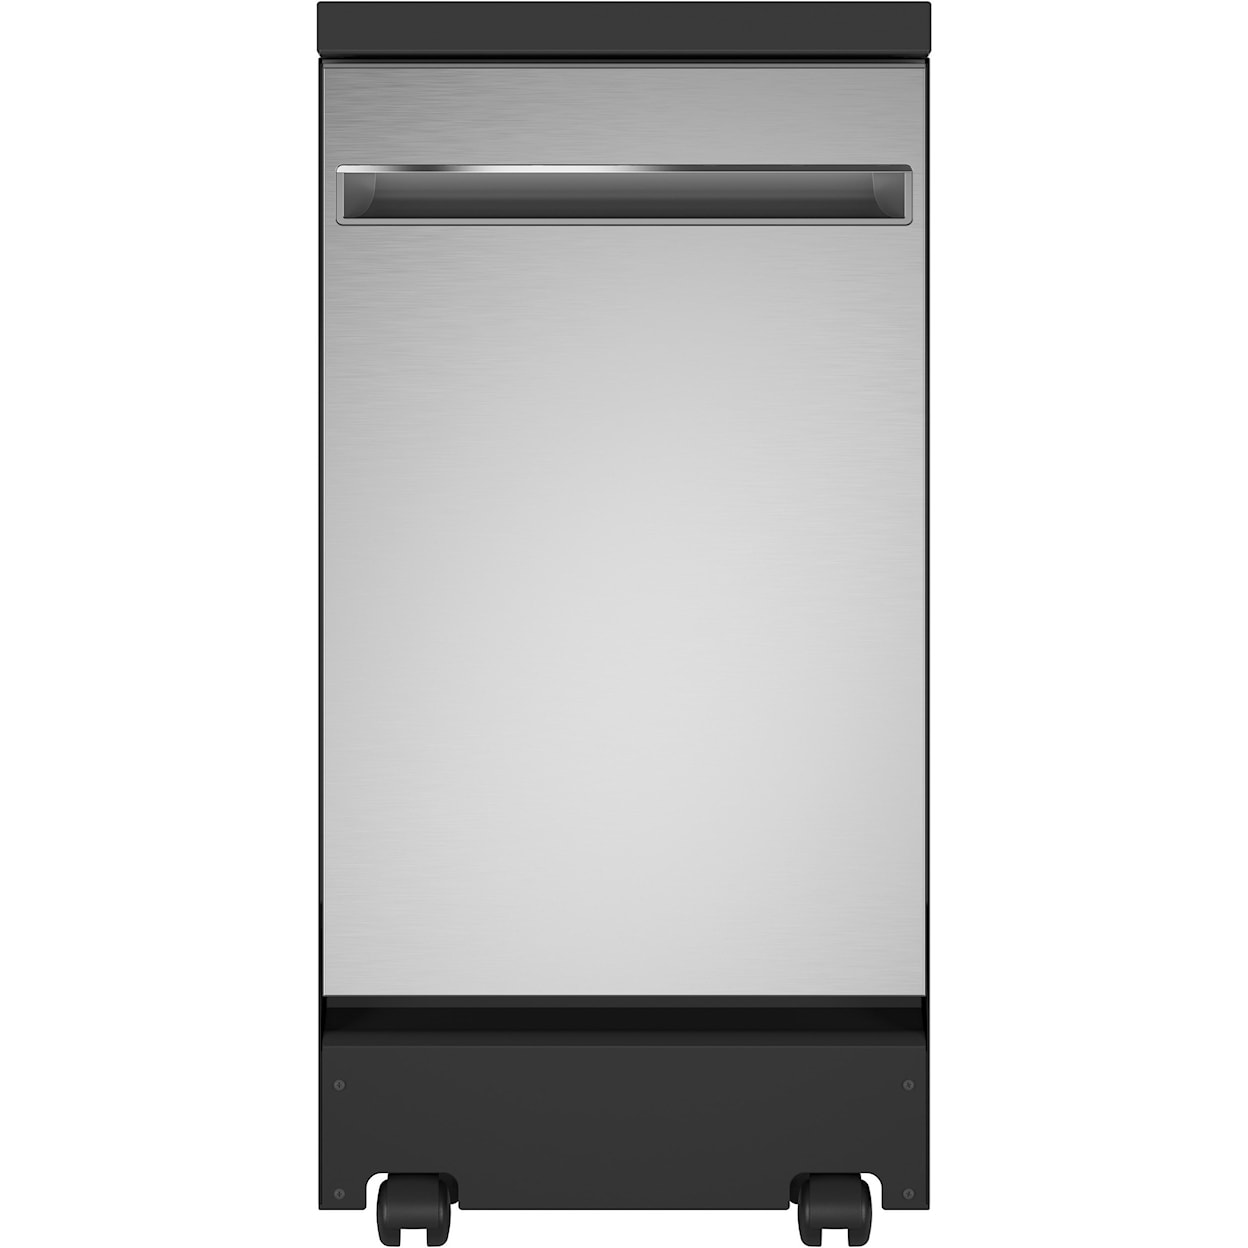 GE Appliances Dishwashers  GE® 18" Portable Dishwasher